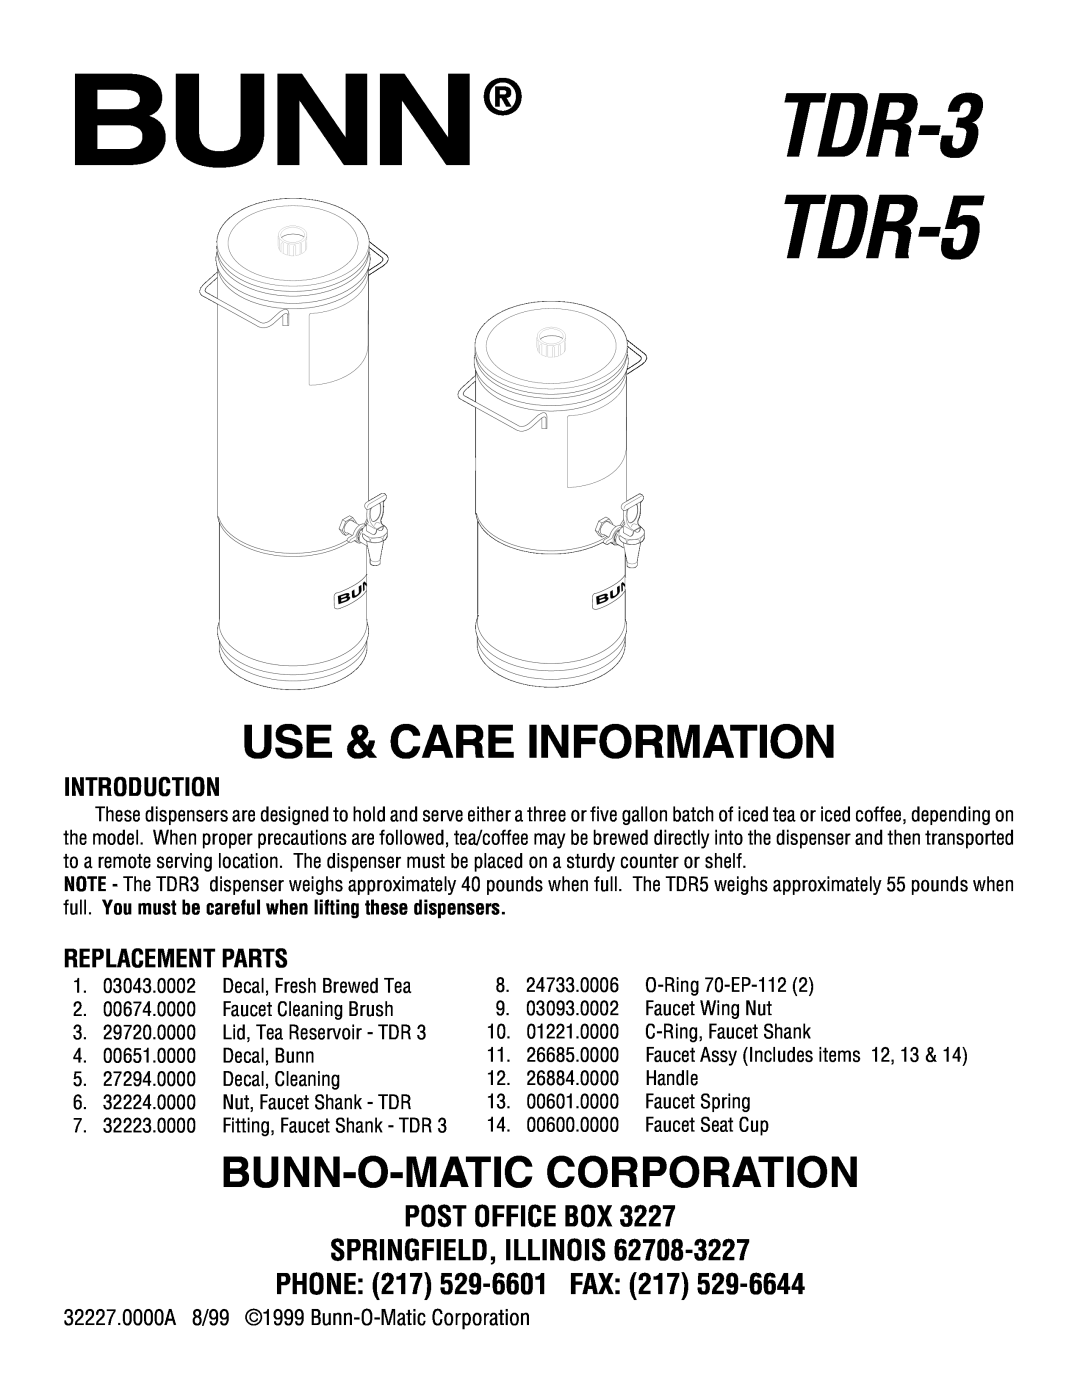 Bunn manual Introduction, Replacement Parts, BUNN TDR-3 TDR-5, Use & Care Information, Bunn-O-Maticcorporation 